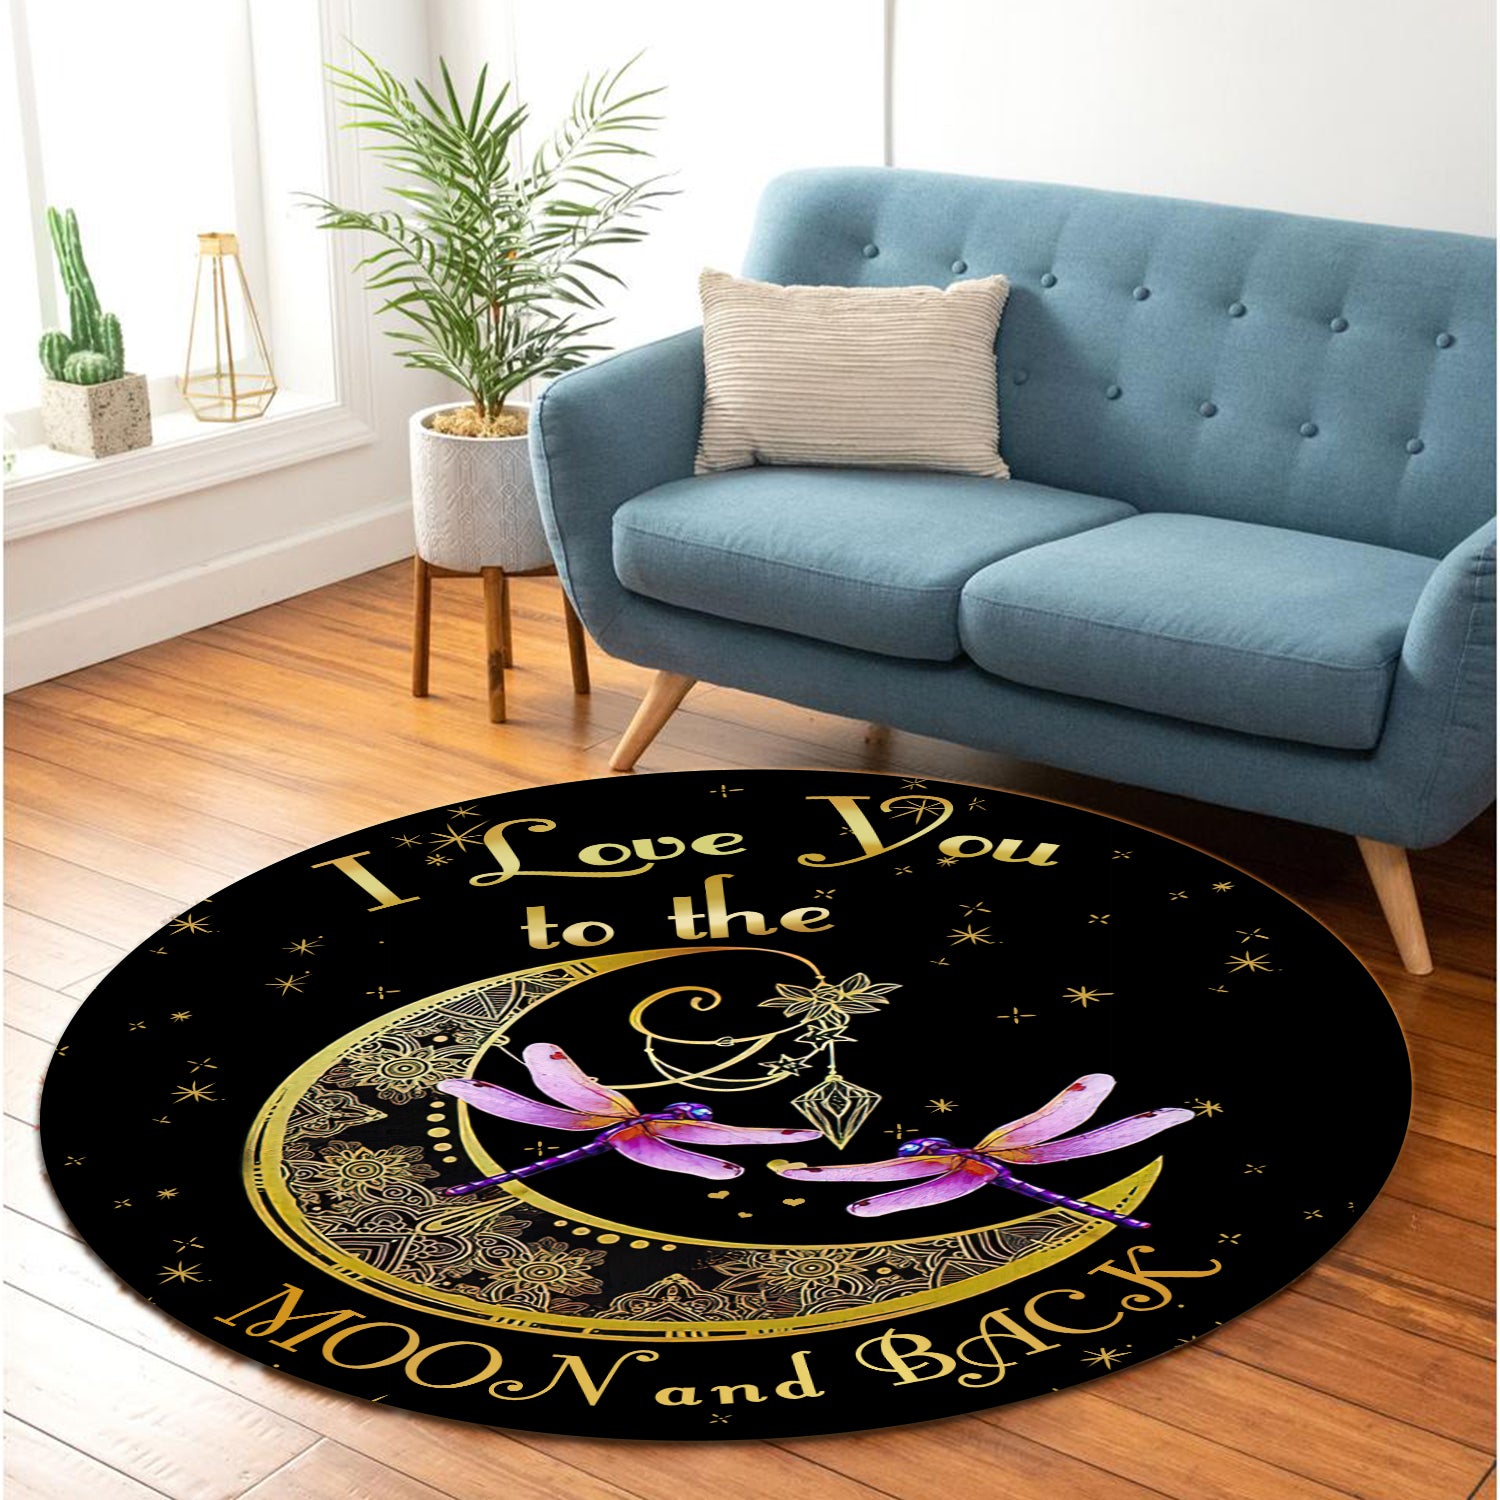 Dragonfly Love To The Moon Round Carpet Rug Bedroom Livingroom Home Decor Nearkii